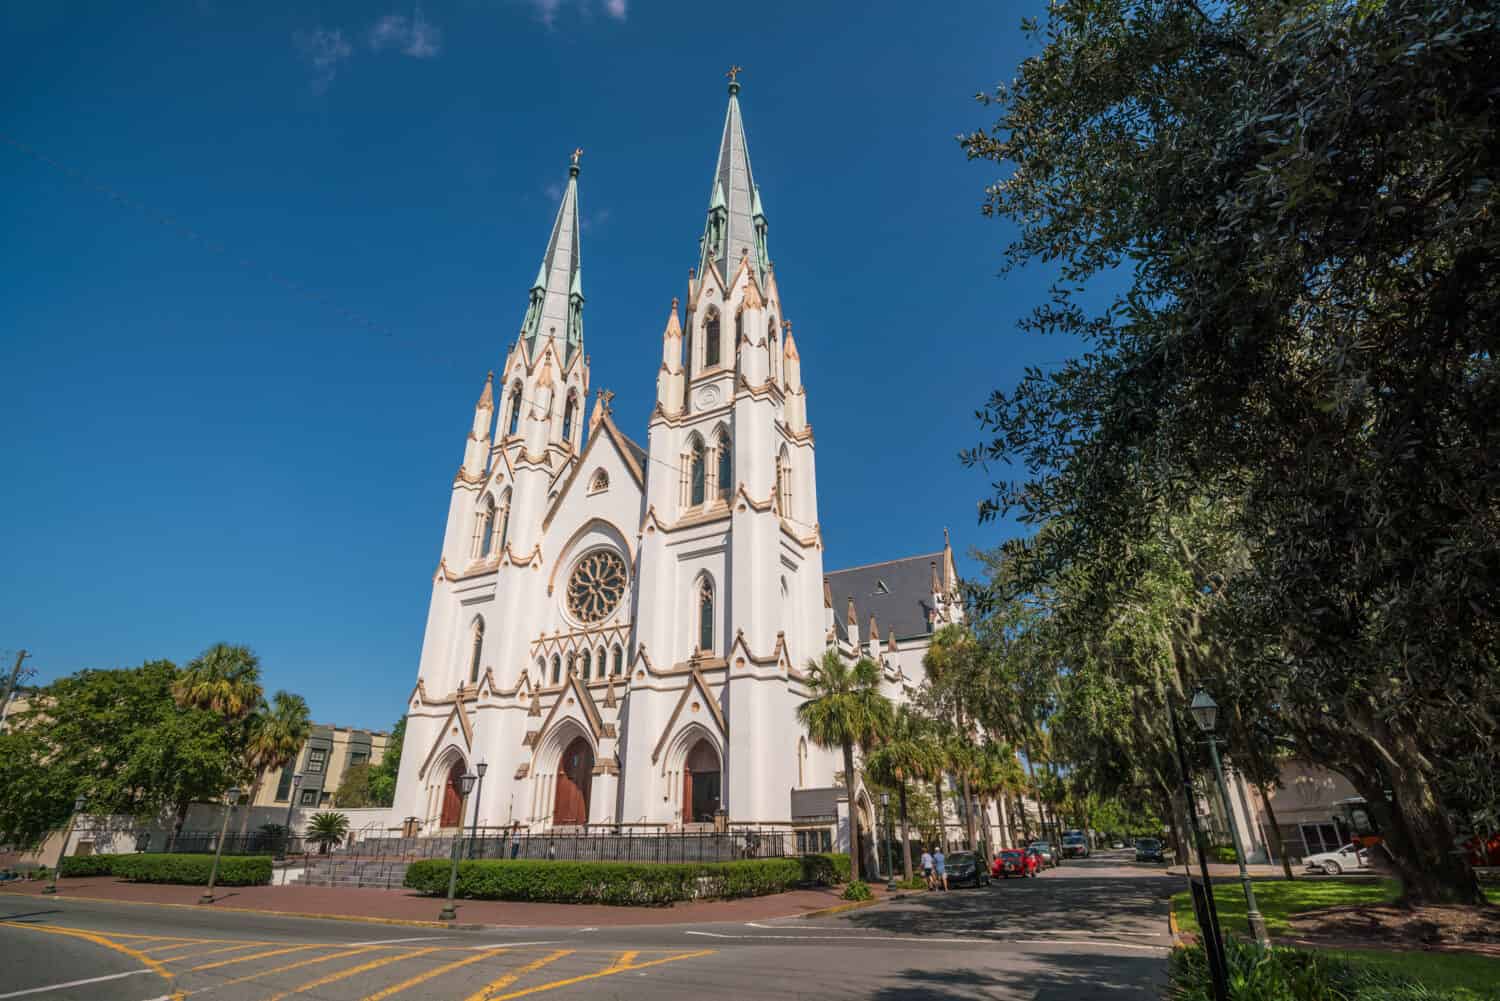 St John the Baptist Cathedral in Savannah Georgia, USA